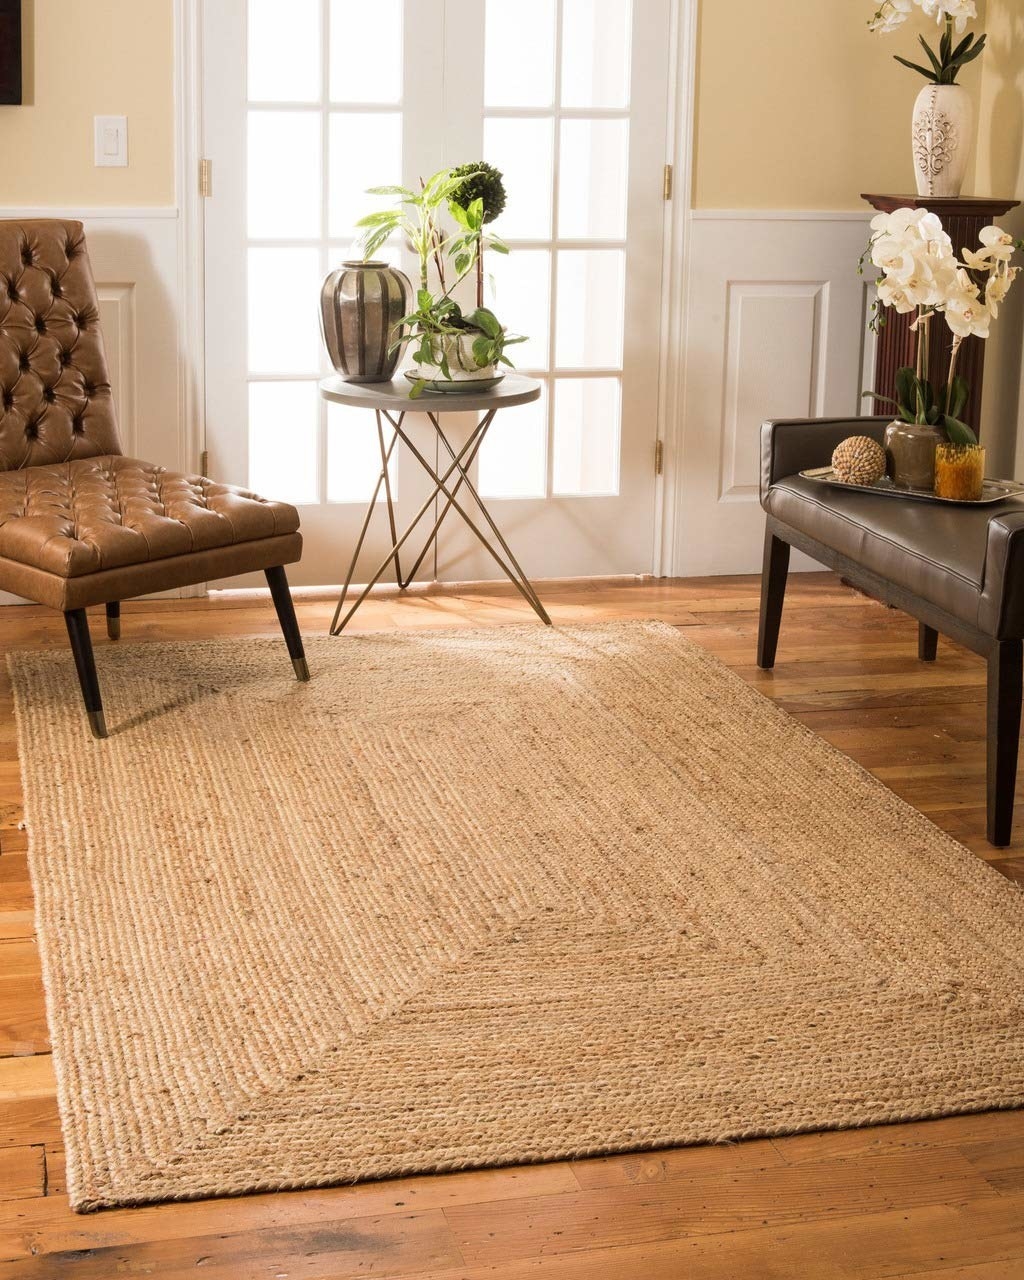 A rectangular jute rug placed on a hardwood floor. 